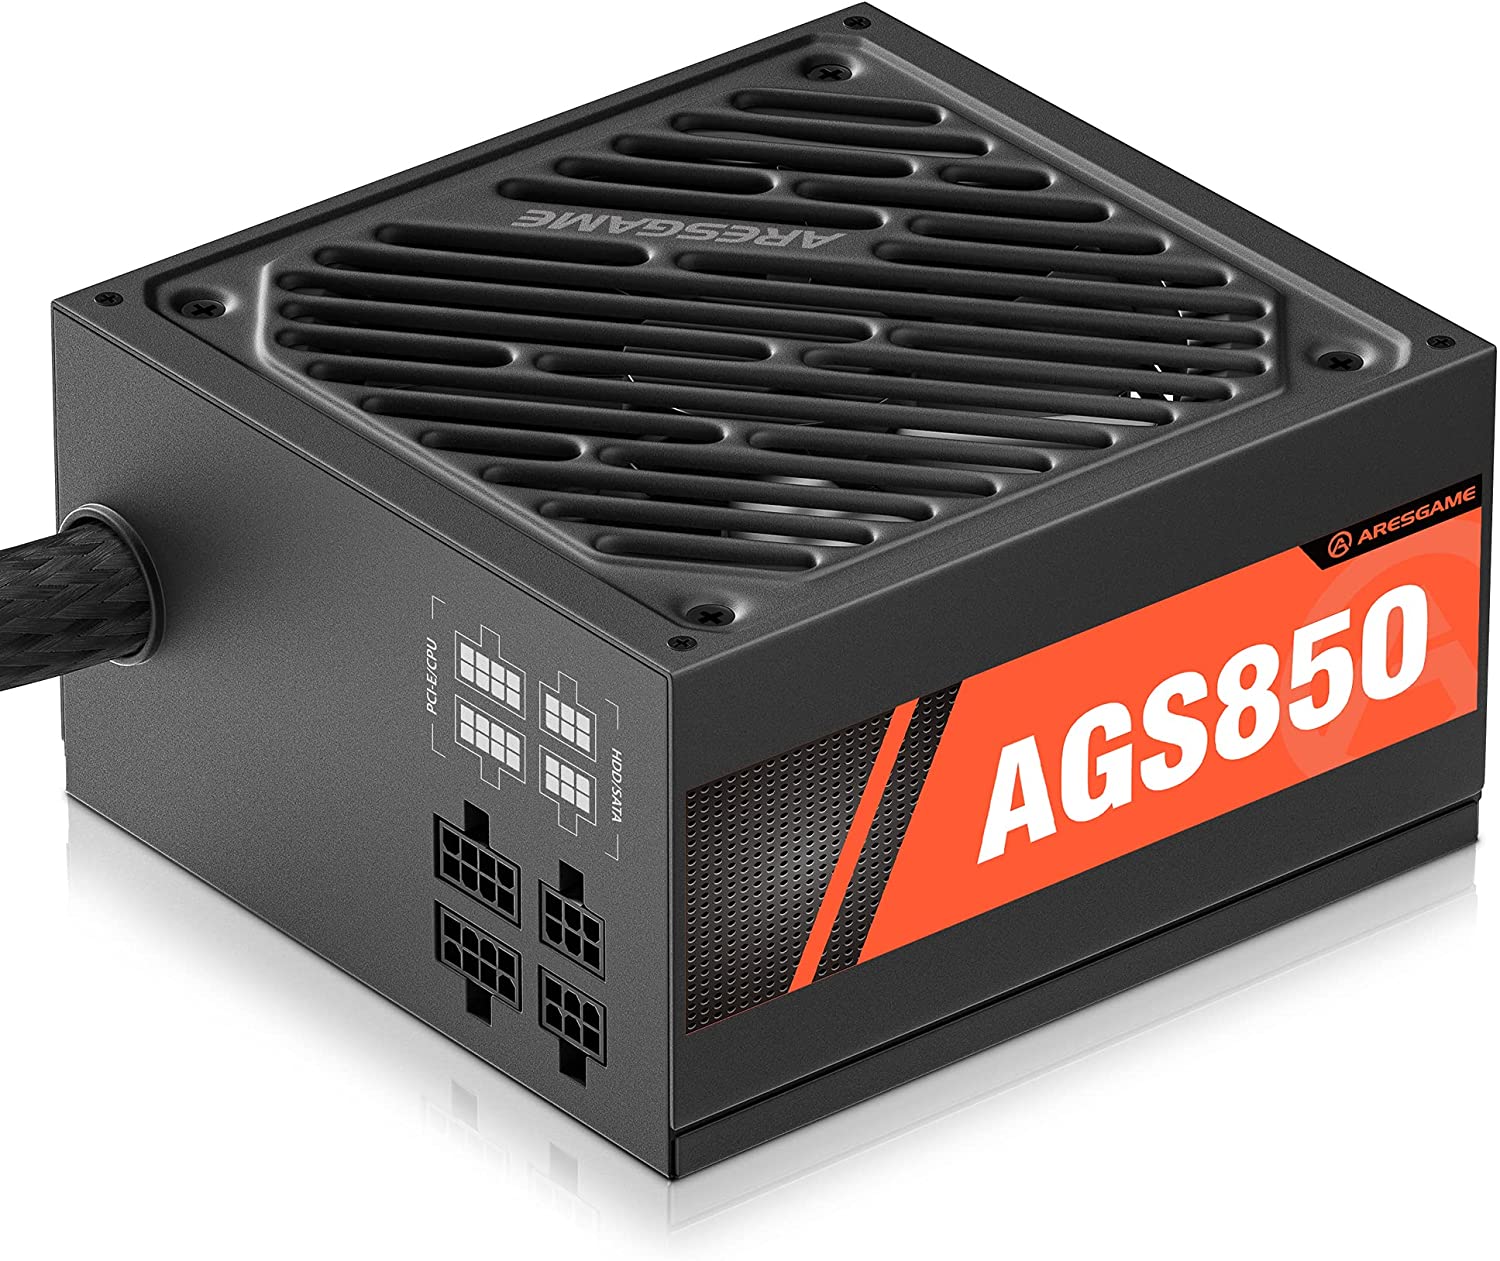 ARESGAME 850W Power Supply 80+ Semi Modular PSU (AGS850)